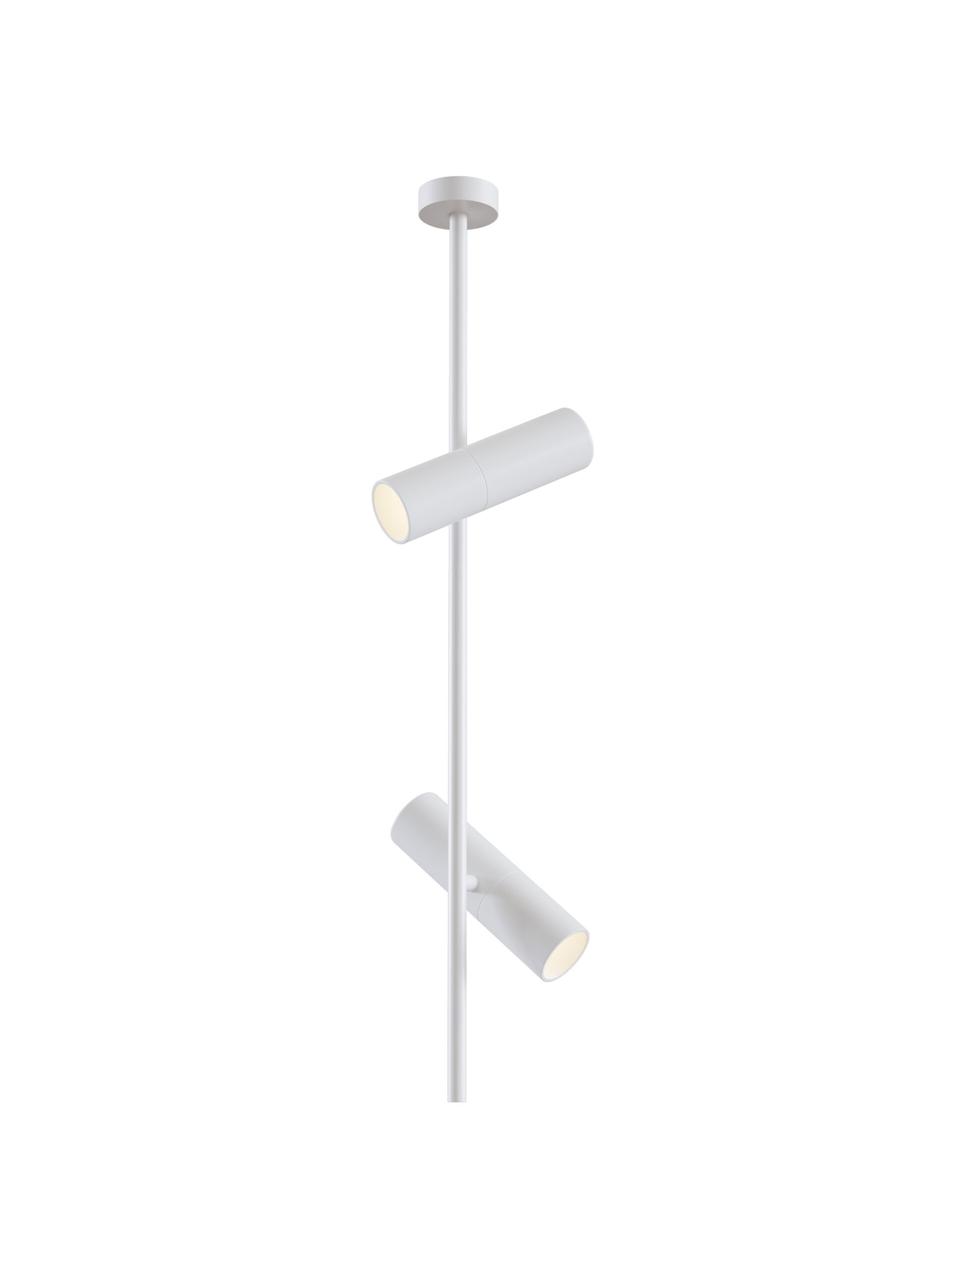 Suspension moderne LED blanche Elti, Blanc, larg. 20 x haut. 77 cm